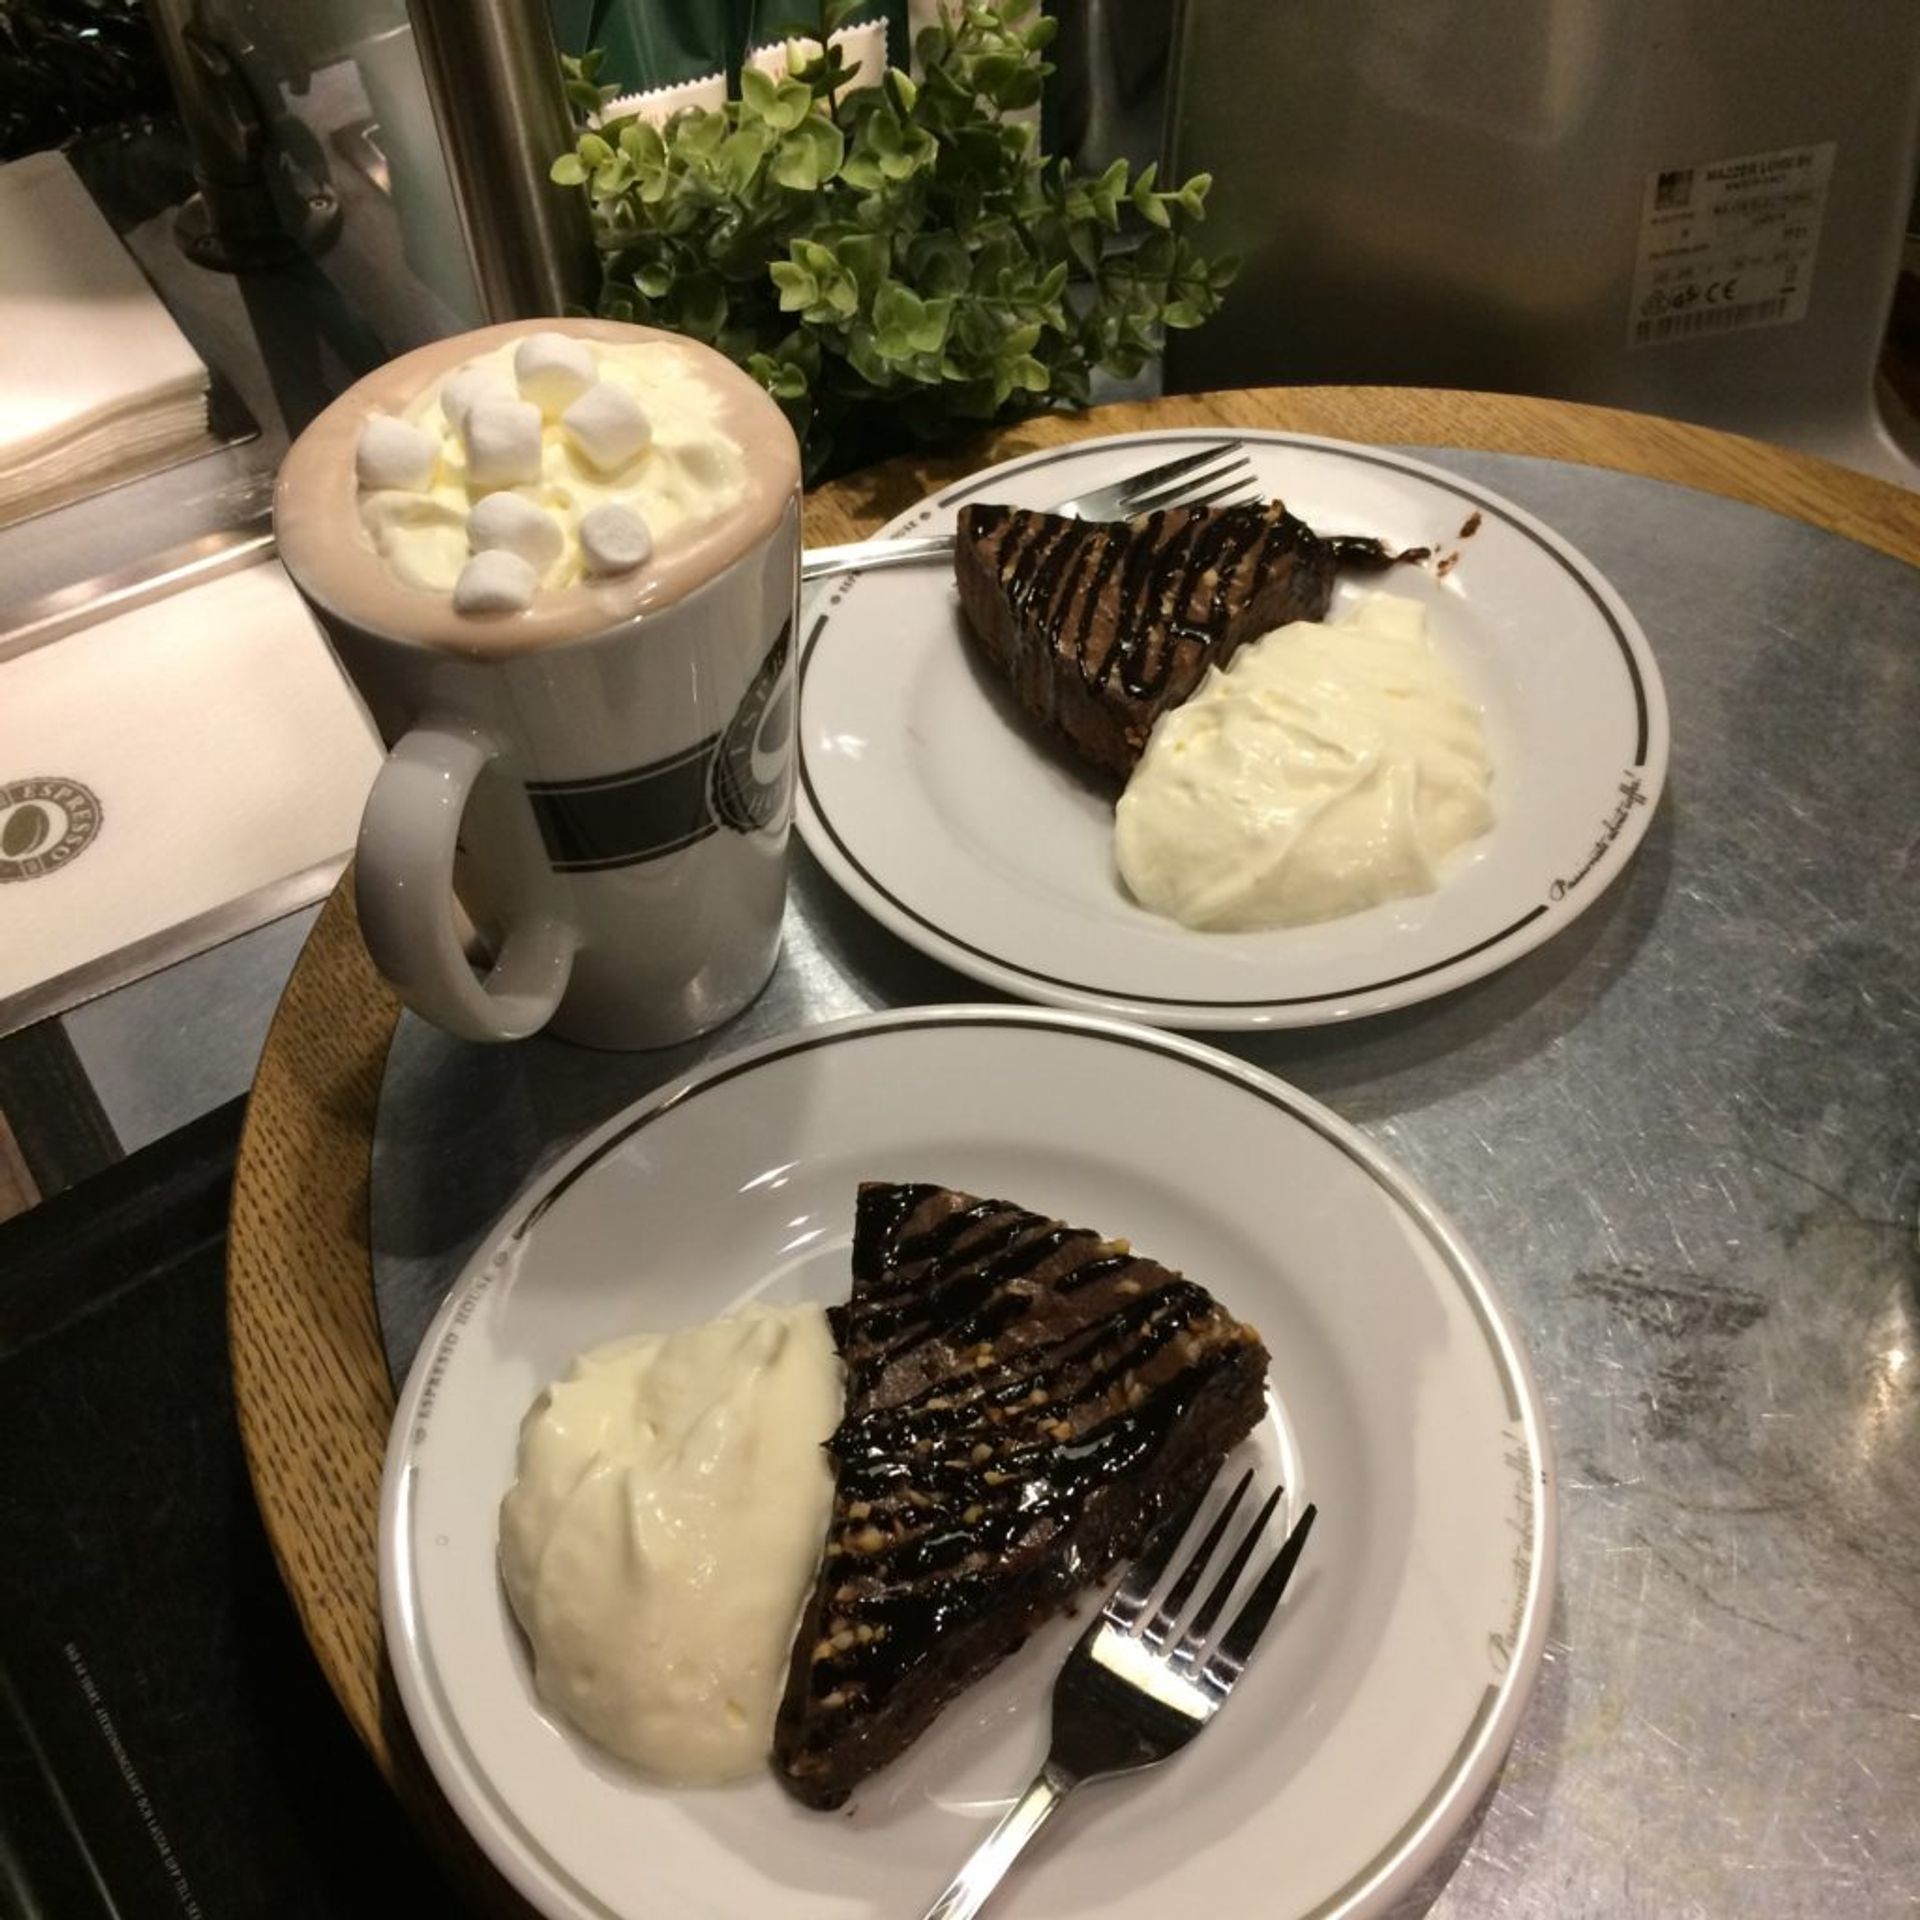 Chocolate cake and latte.